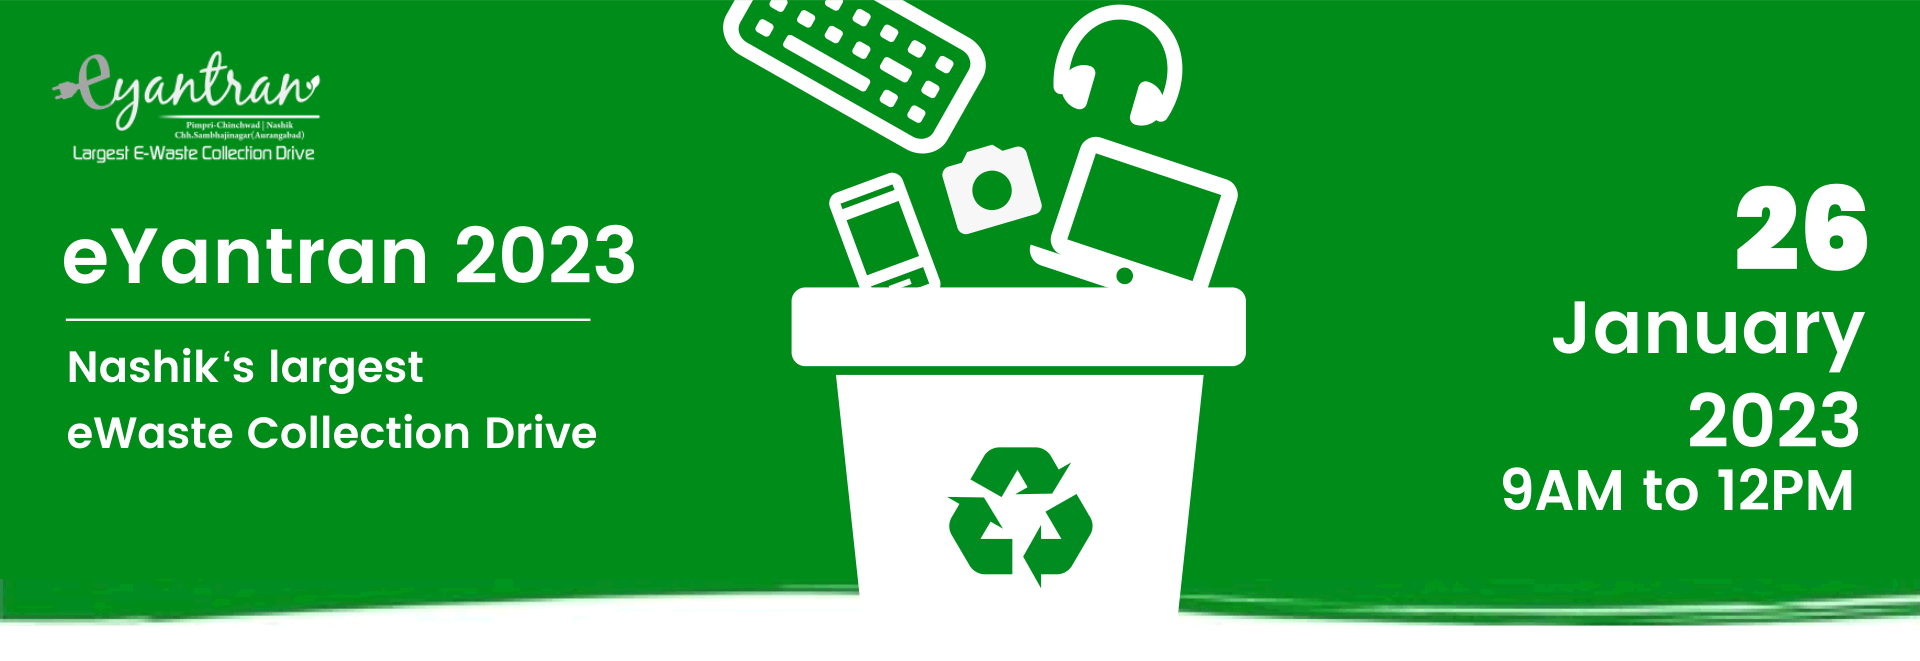 eYantran 2023 - Nashik's Largest e-waste Collection Drive